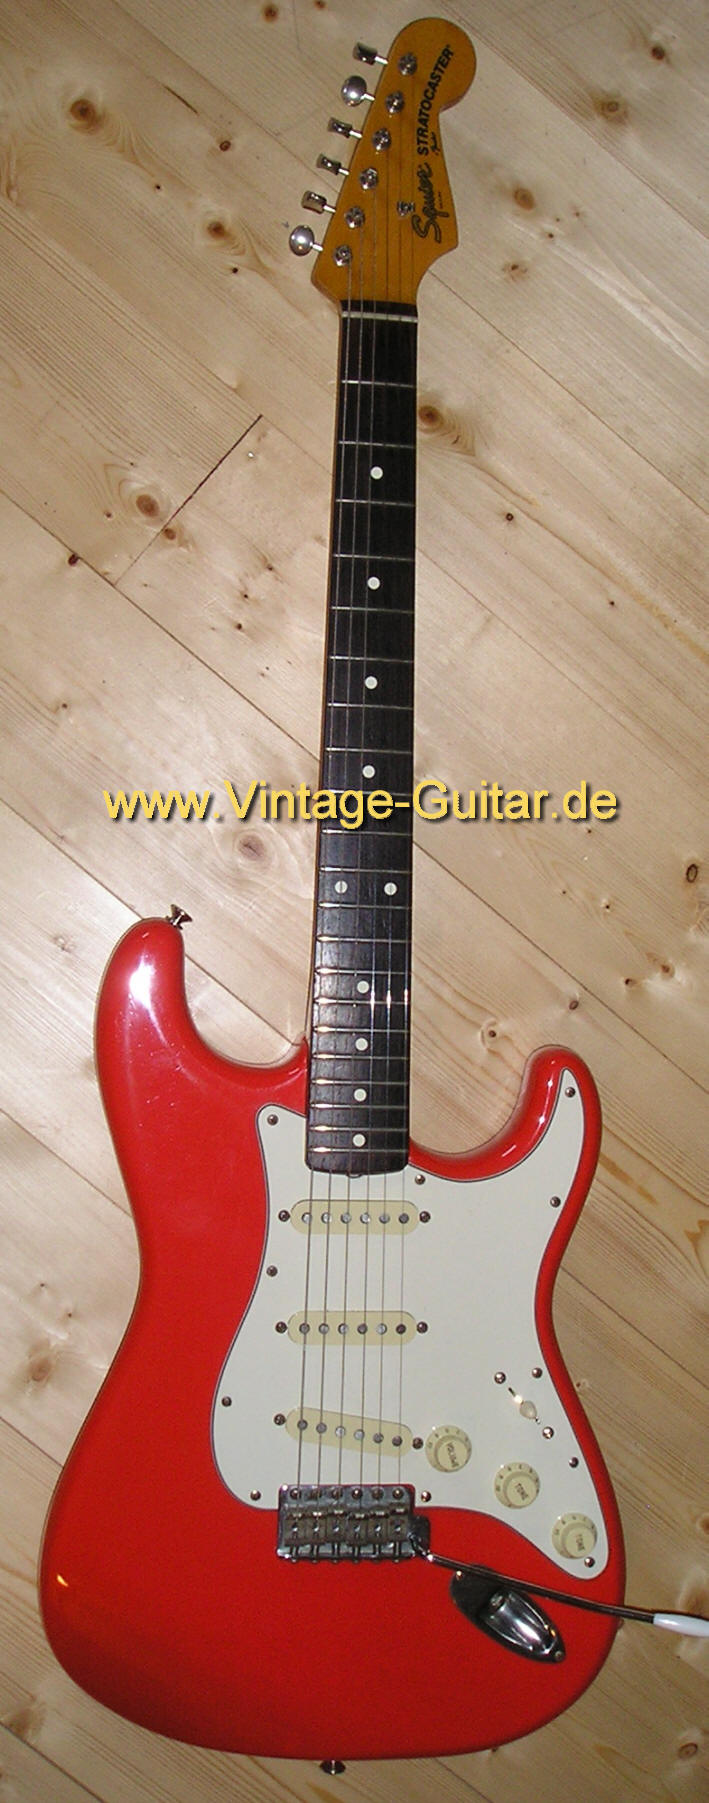 Fender Squire Stratocaster fiestas red JV a.jpg